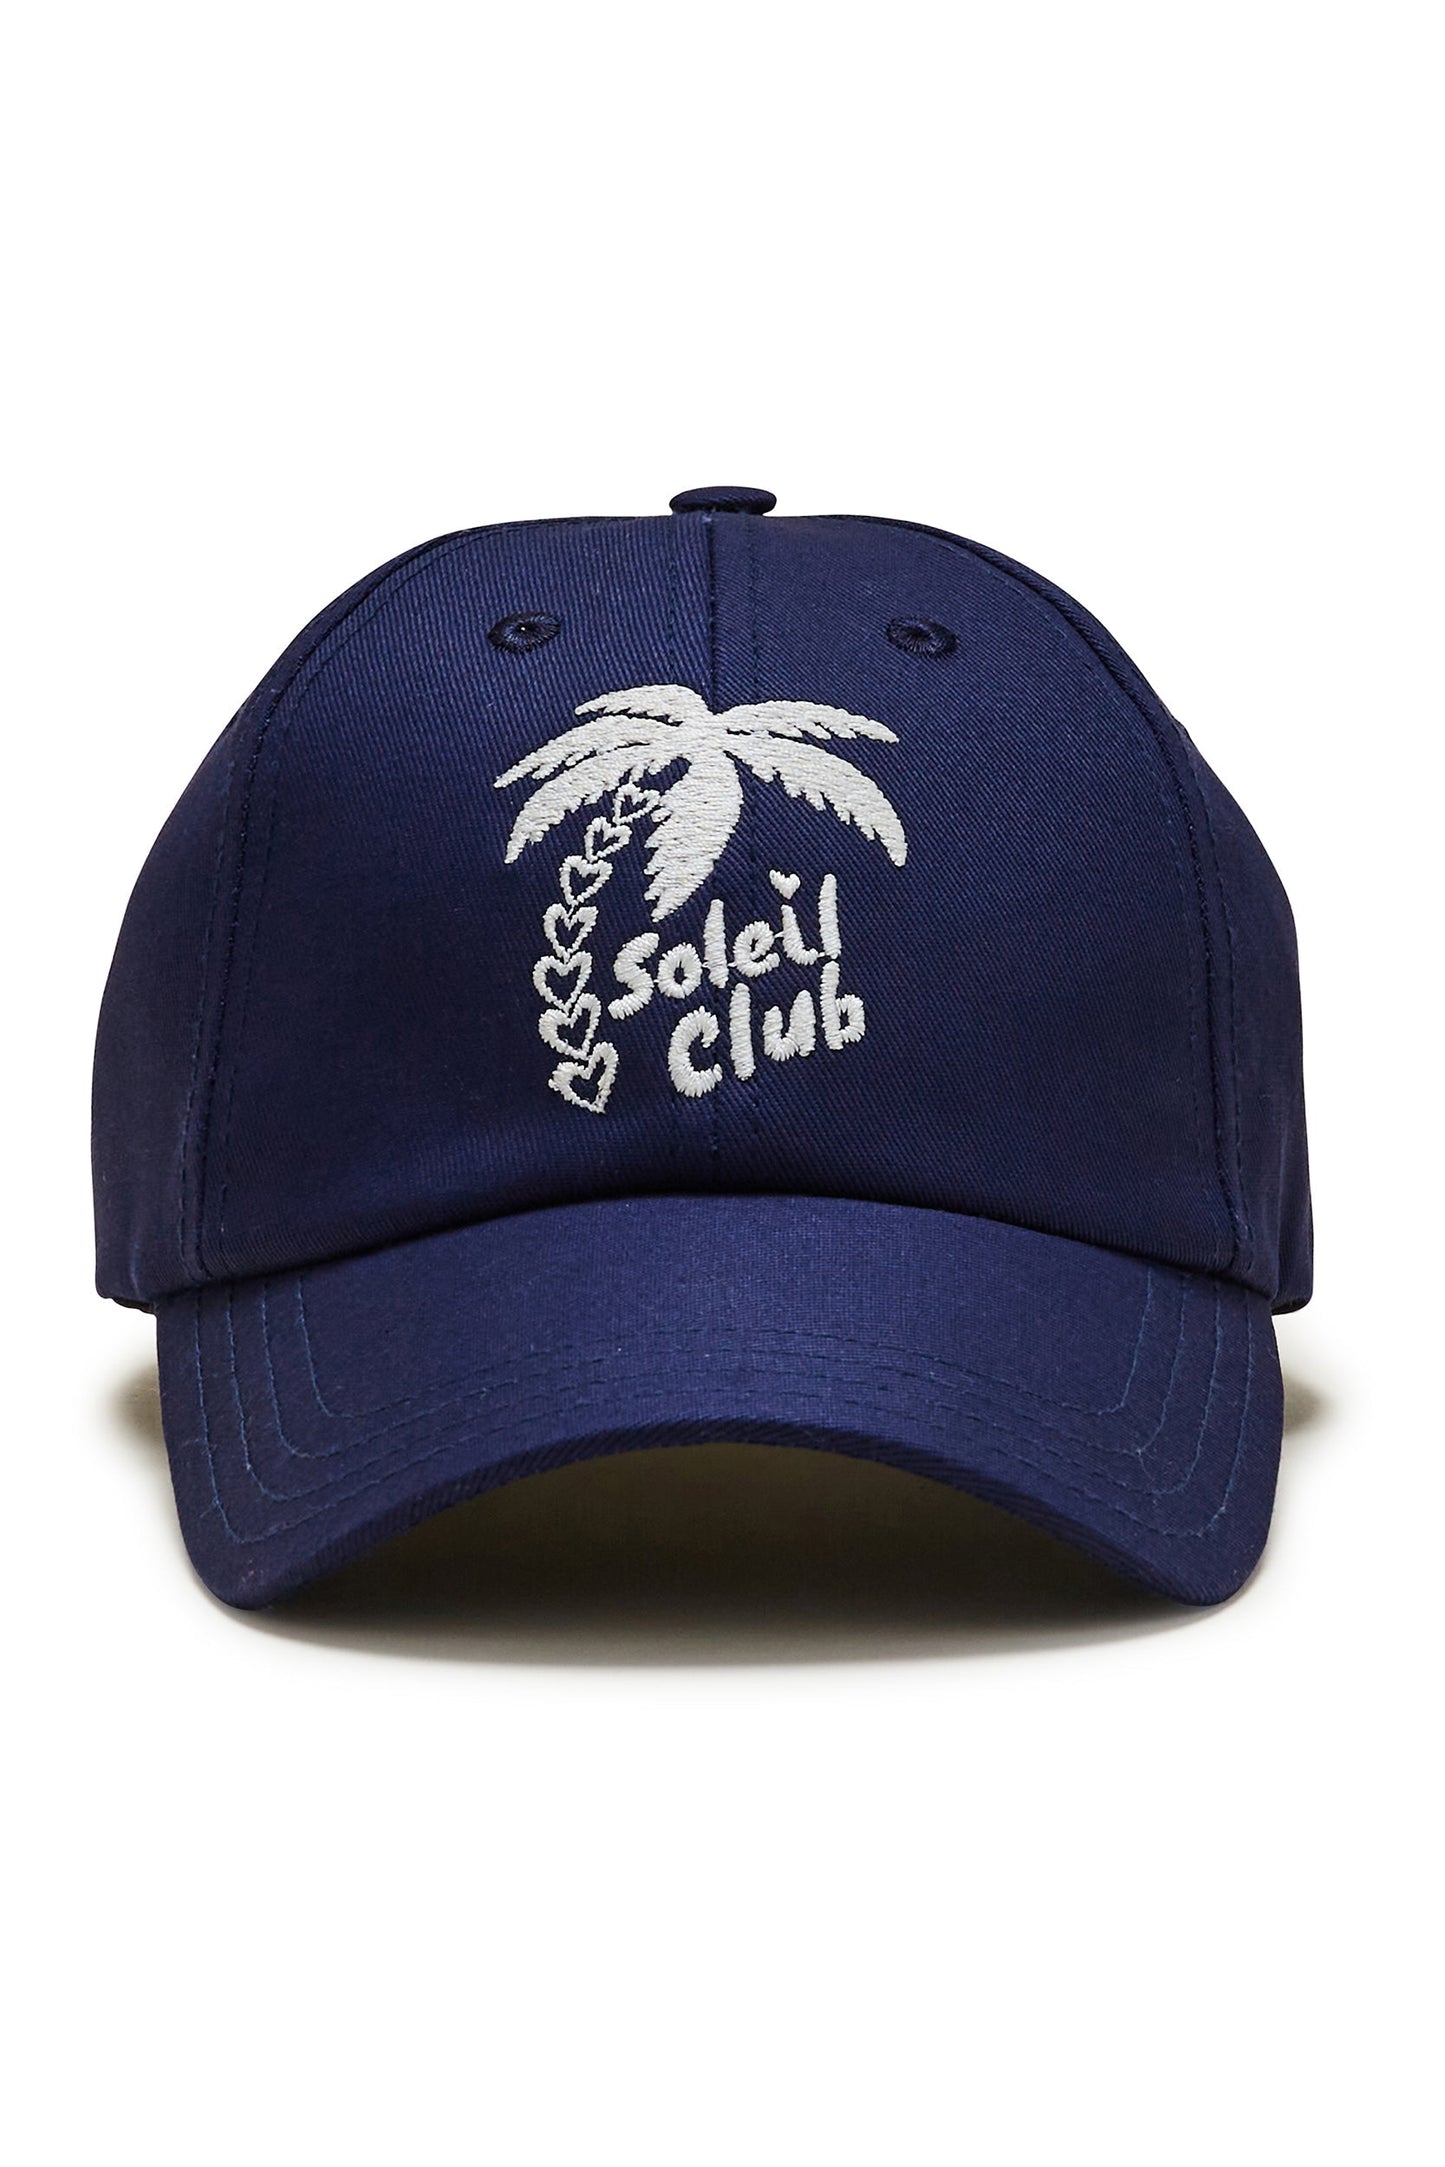 Casquette Soleil Club écru et bleu